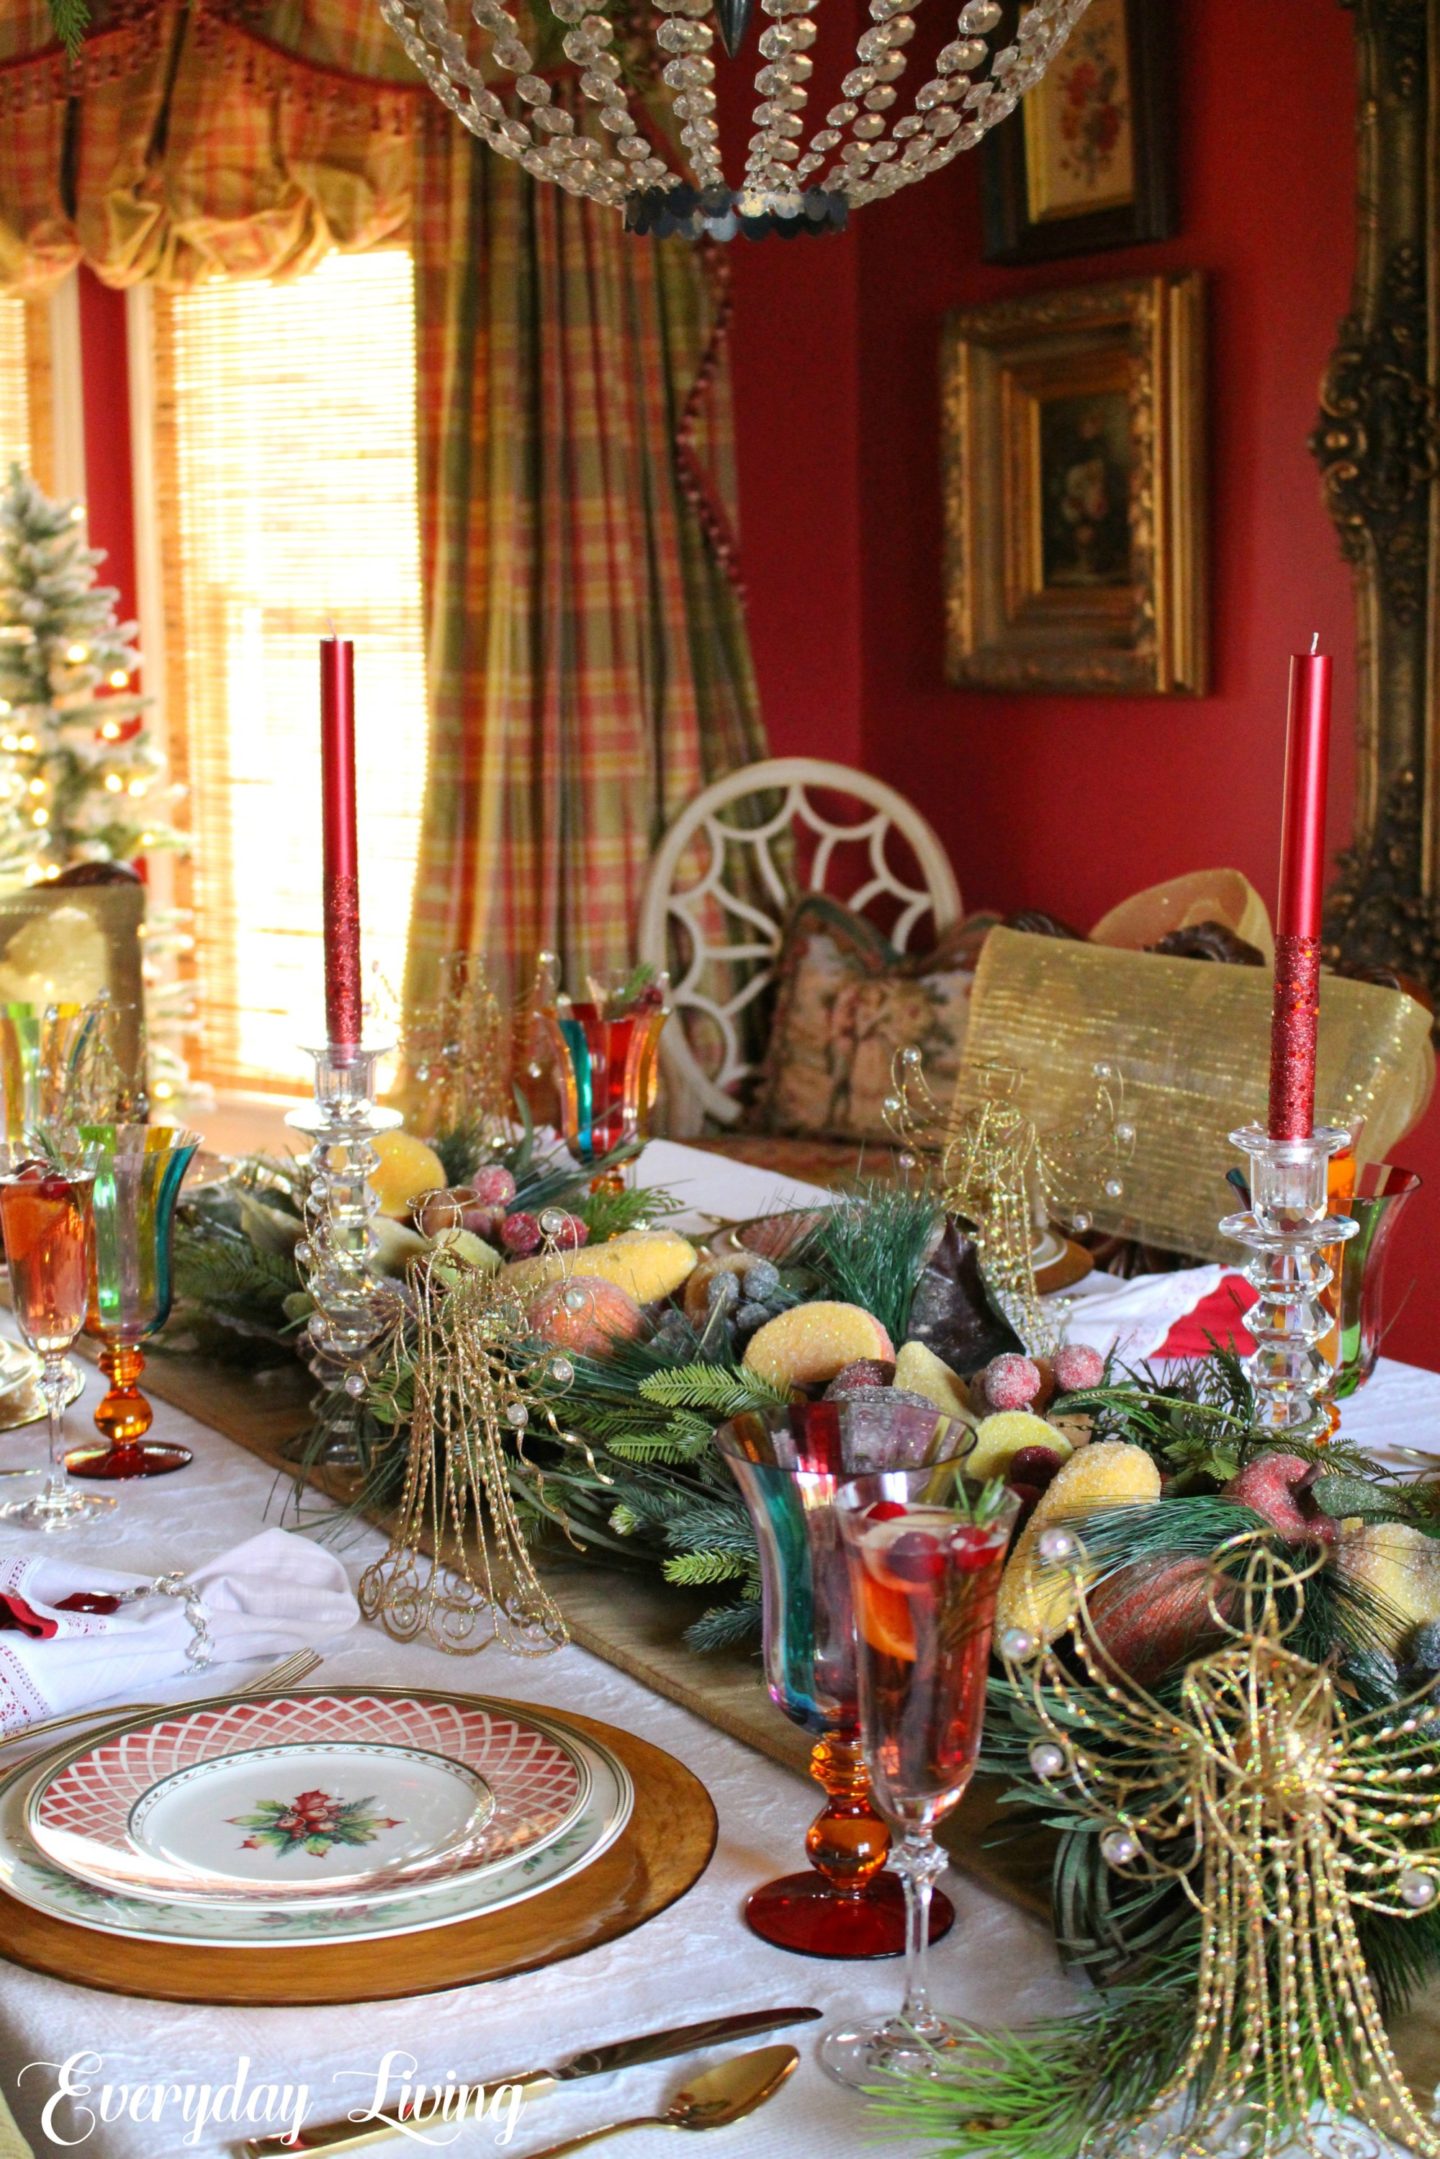 Thursday Favorite Things – A Christmas Table setting